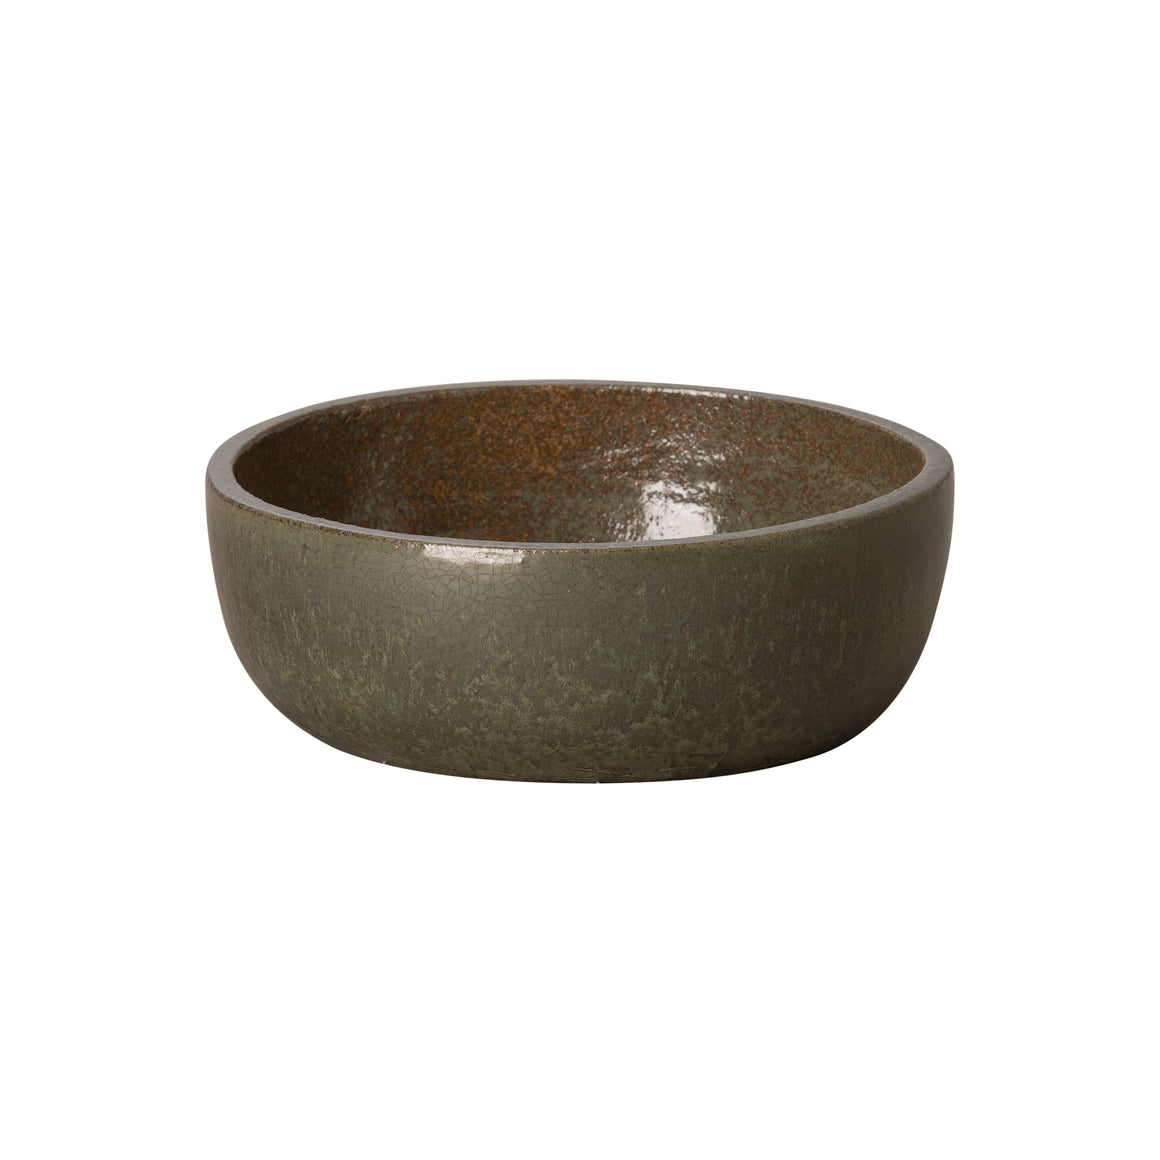 Round Shallow Ceramic Planter with a Metallic Green Glaze